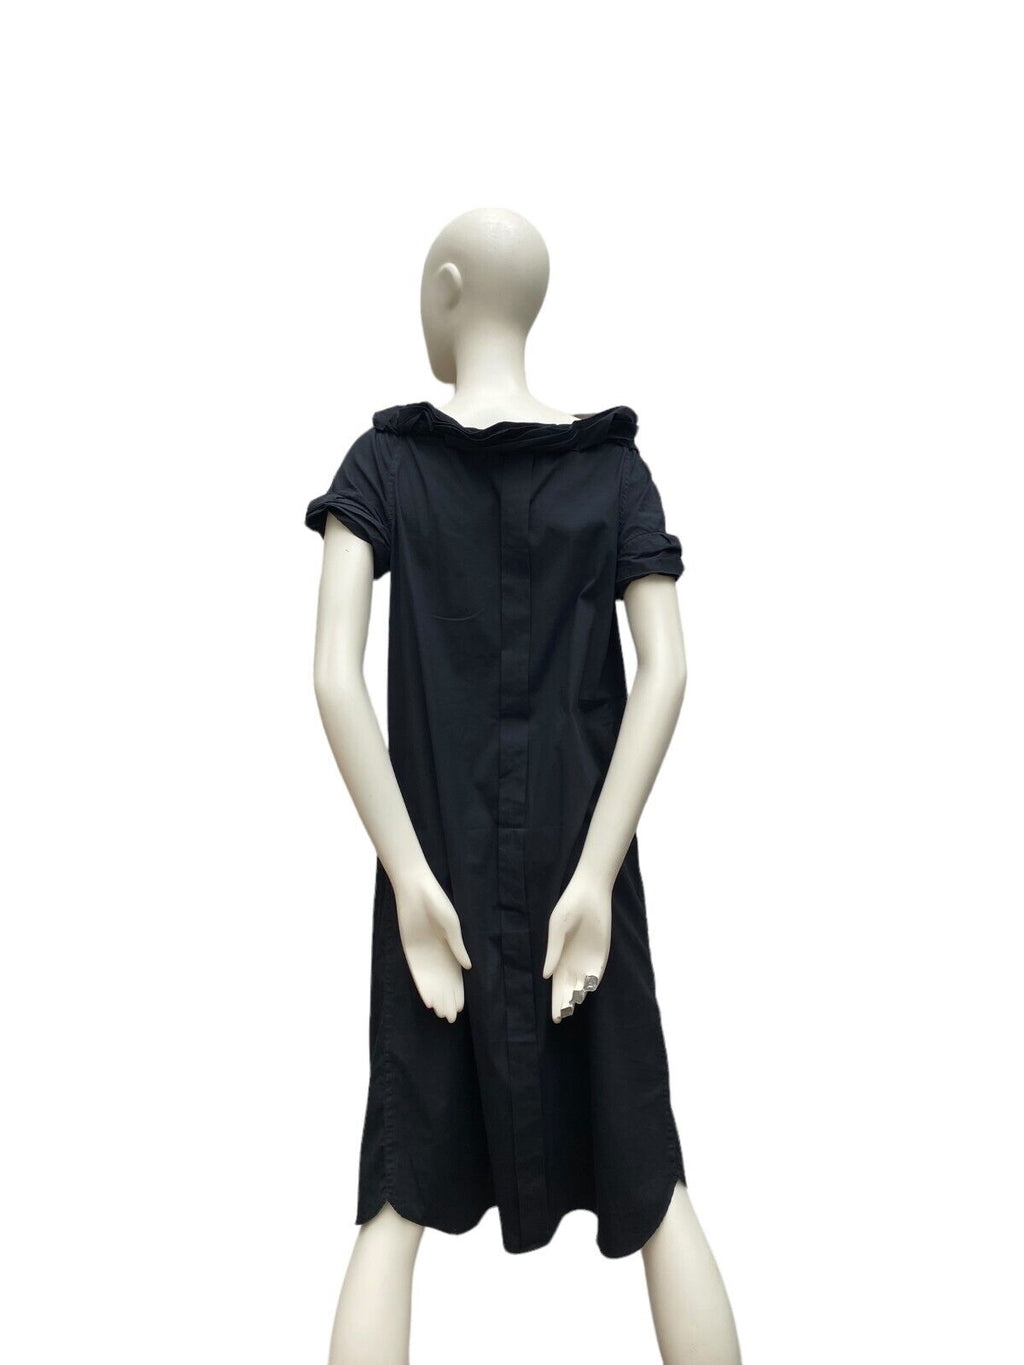 Vintage Elongated Black Dress Size IT 44 / FR 40 US 10